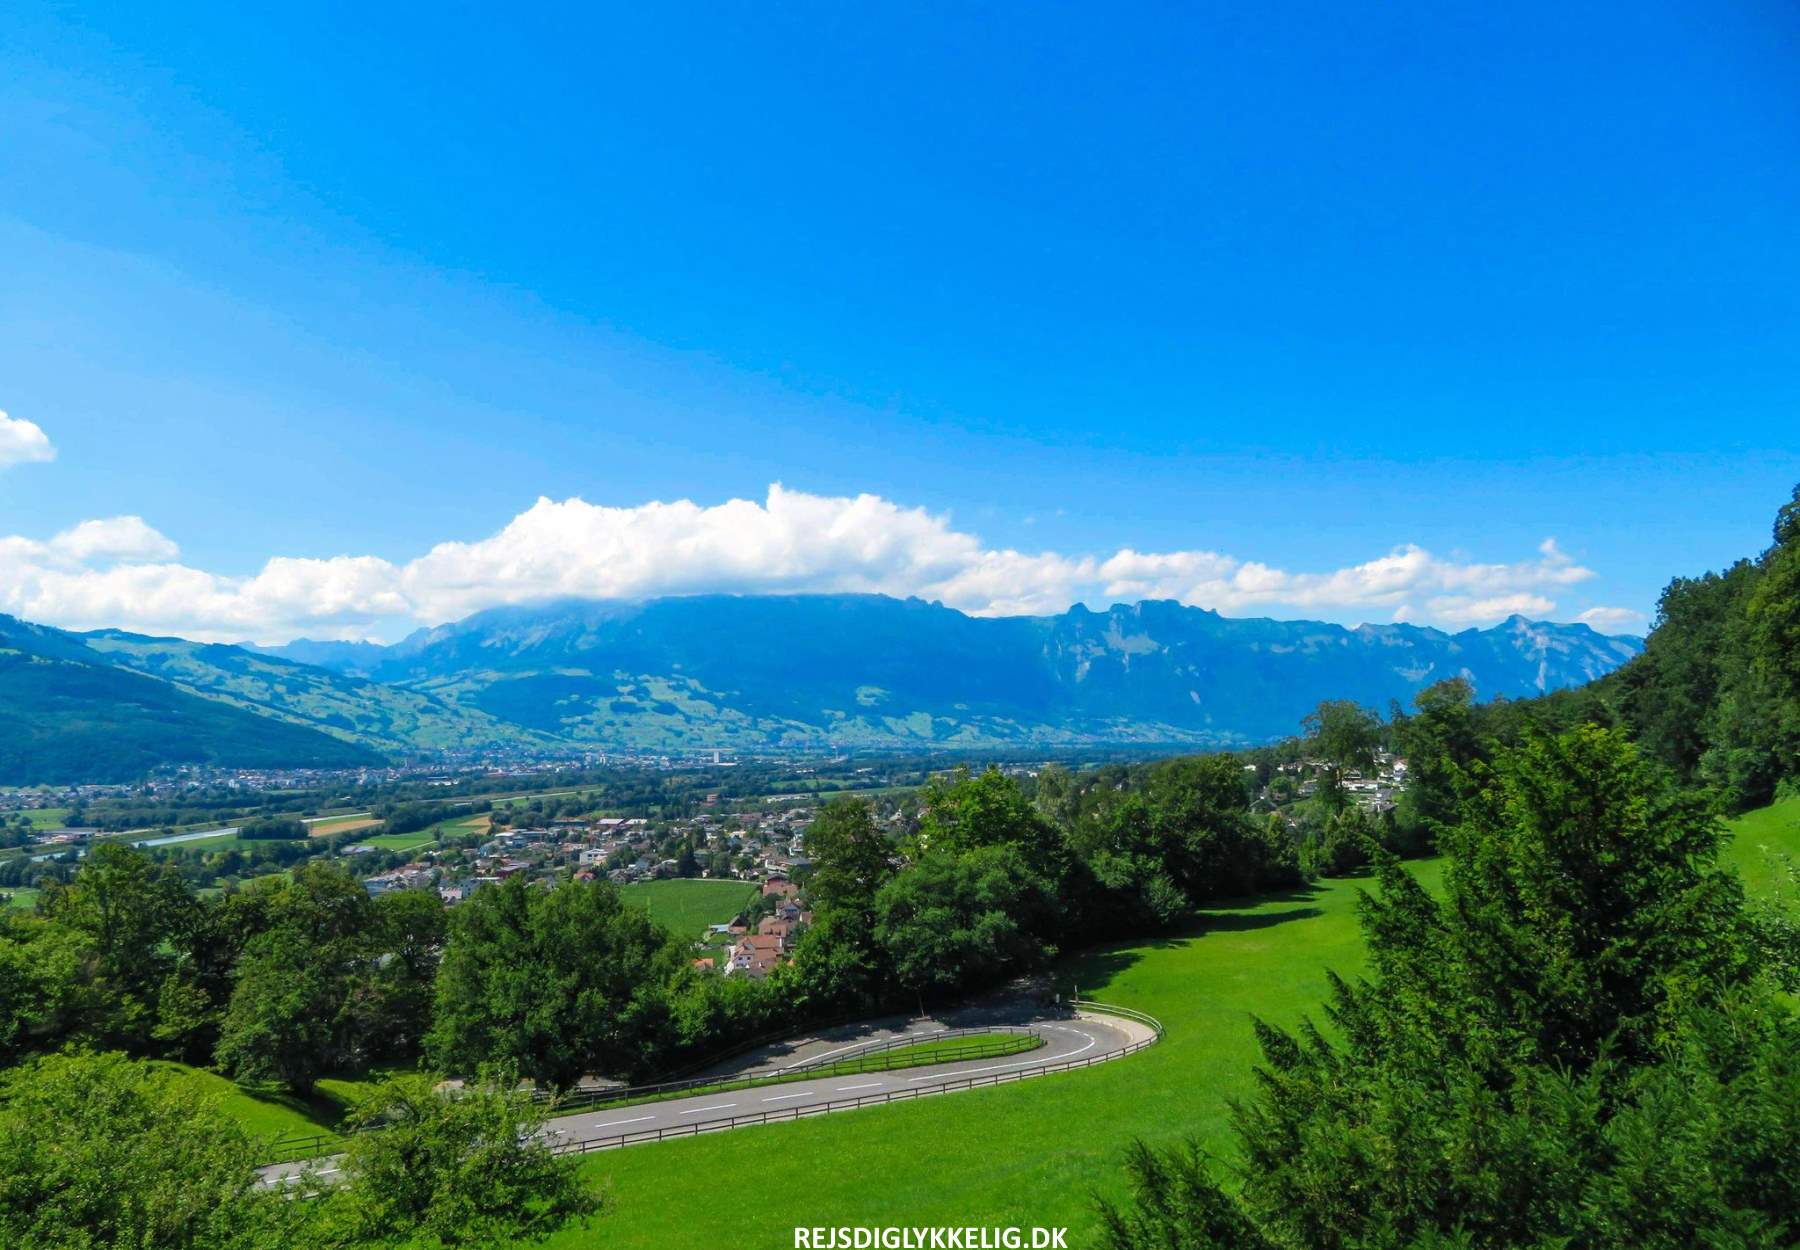 12 Oplevelser i Liechtenstein - Rejs Dig Lykkelig